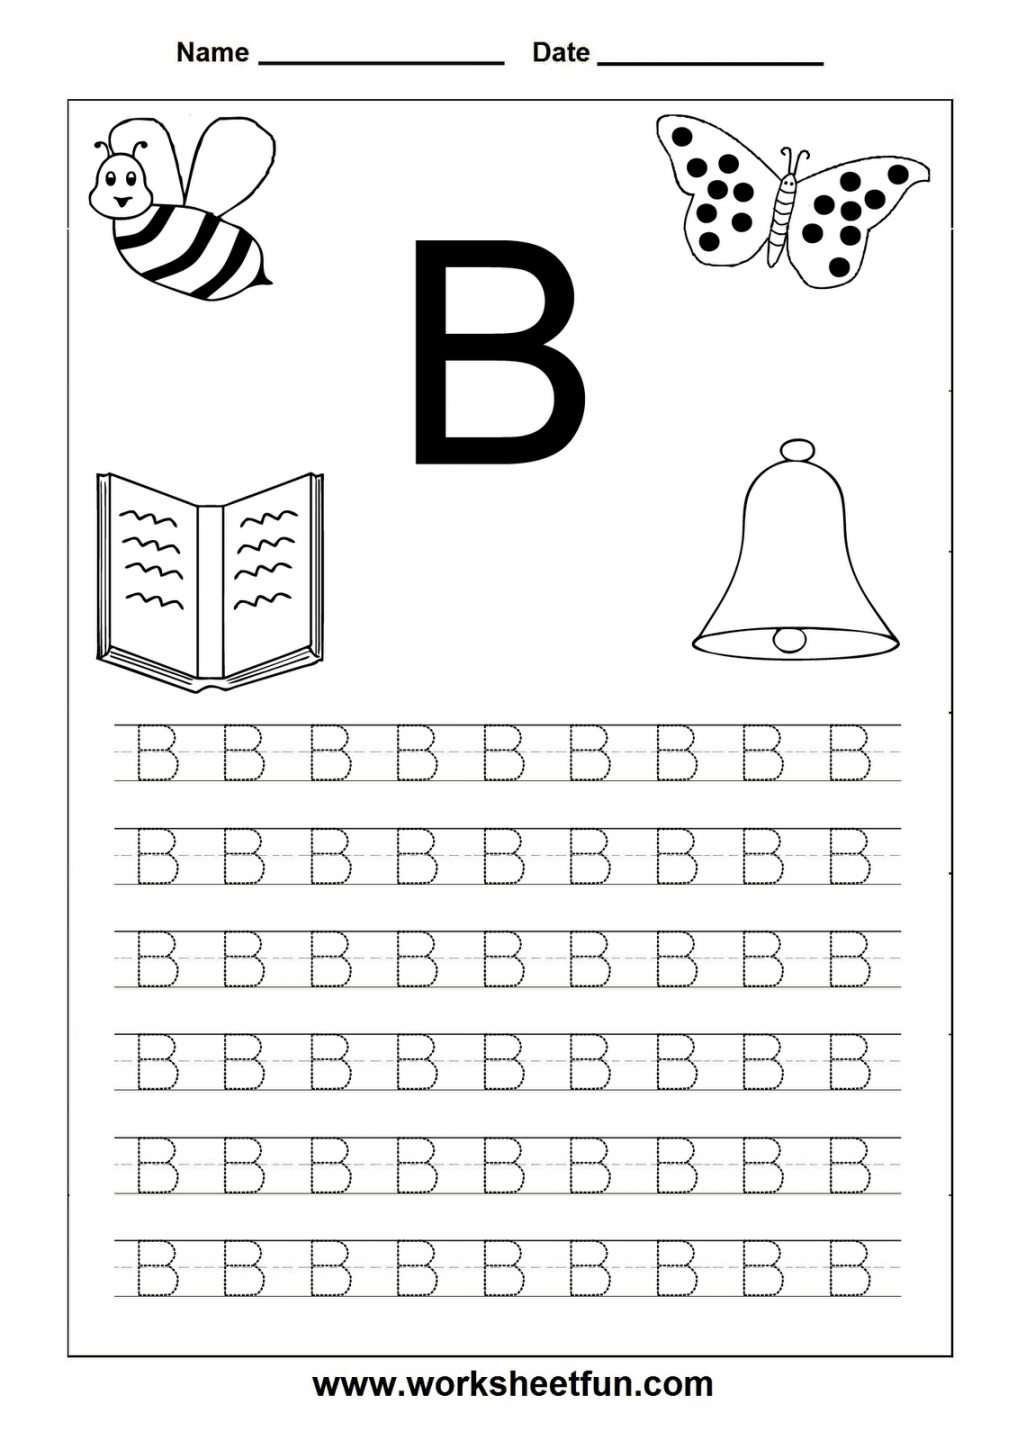 Pin on Homeschooling: Alphabet